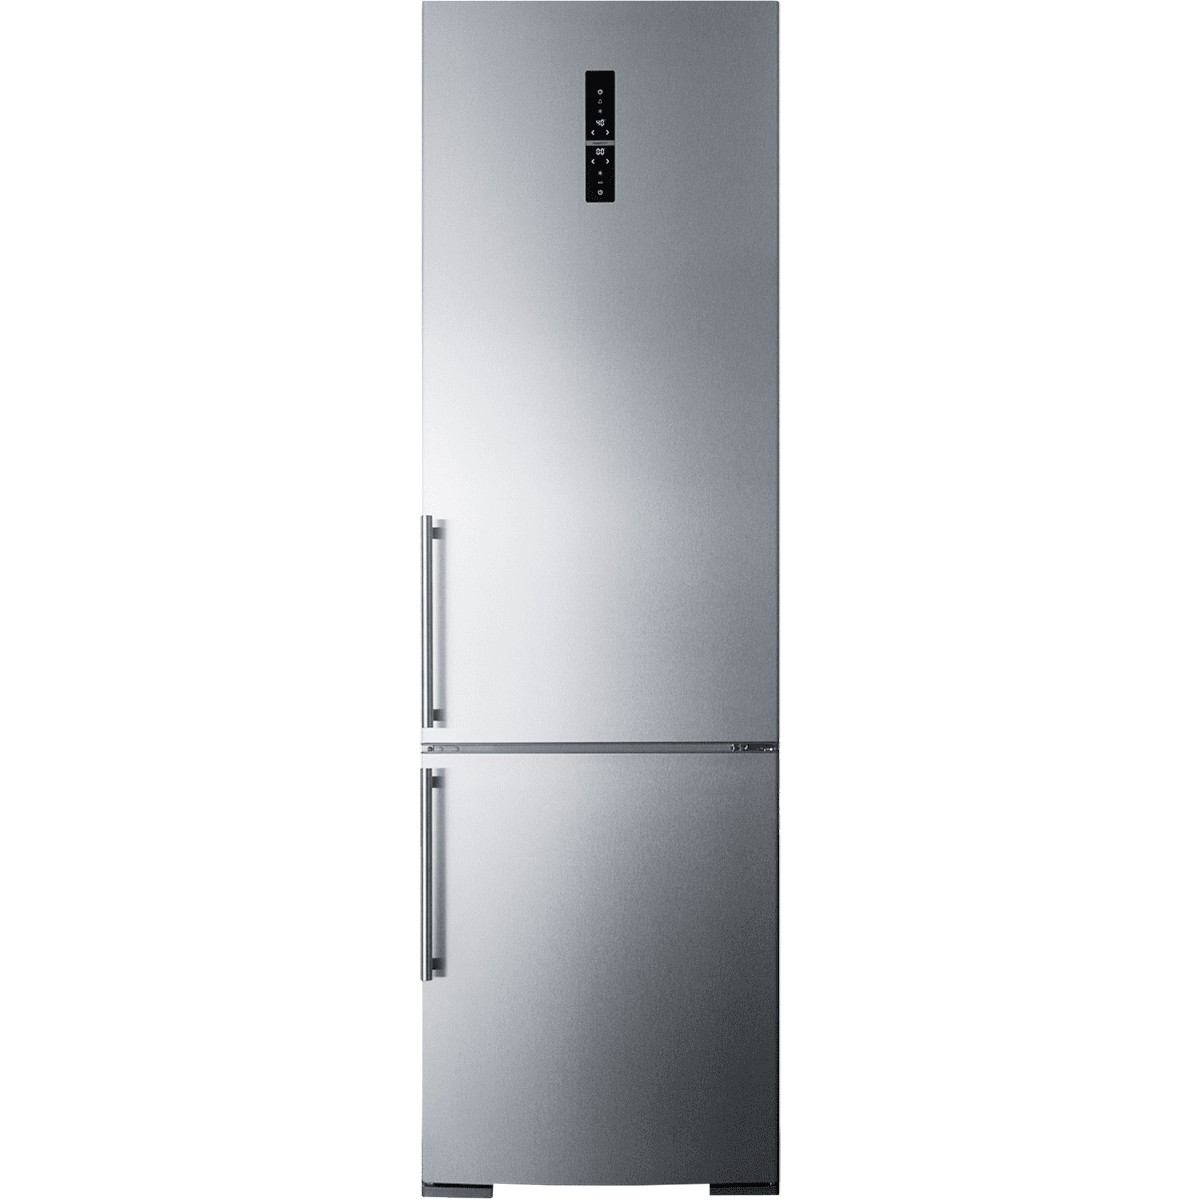 SUMMIT 12.8 Cu. Ft. Energy Star Refrigerator w/ Bottom Freezer